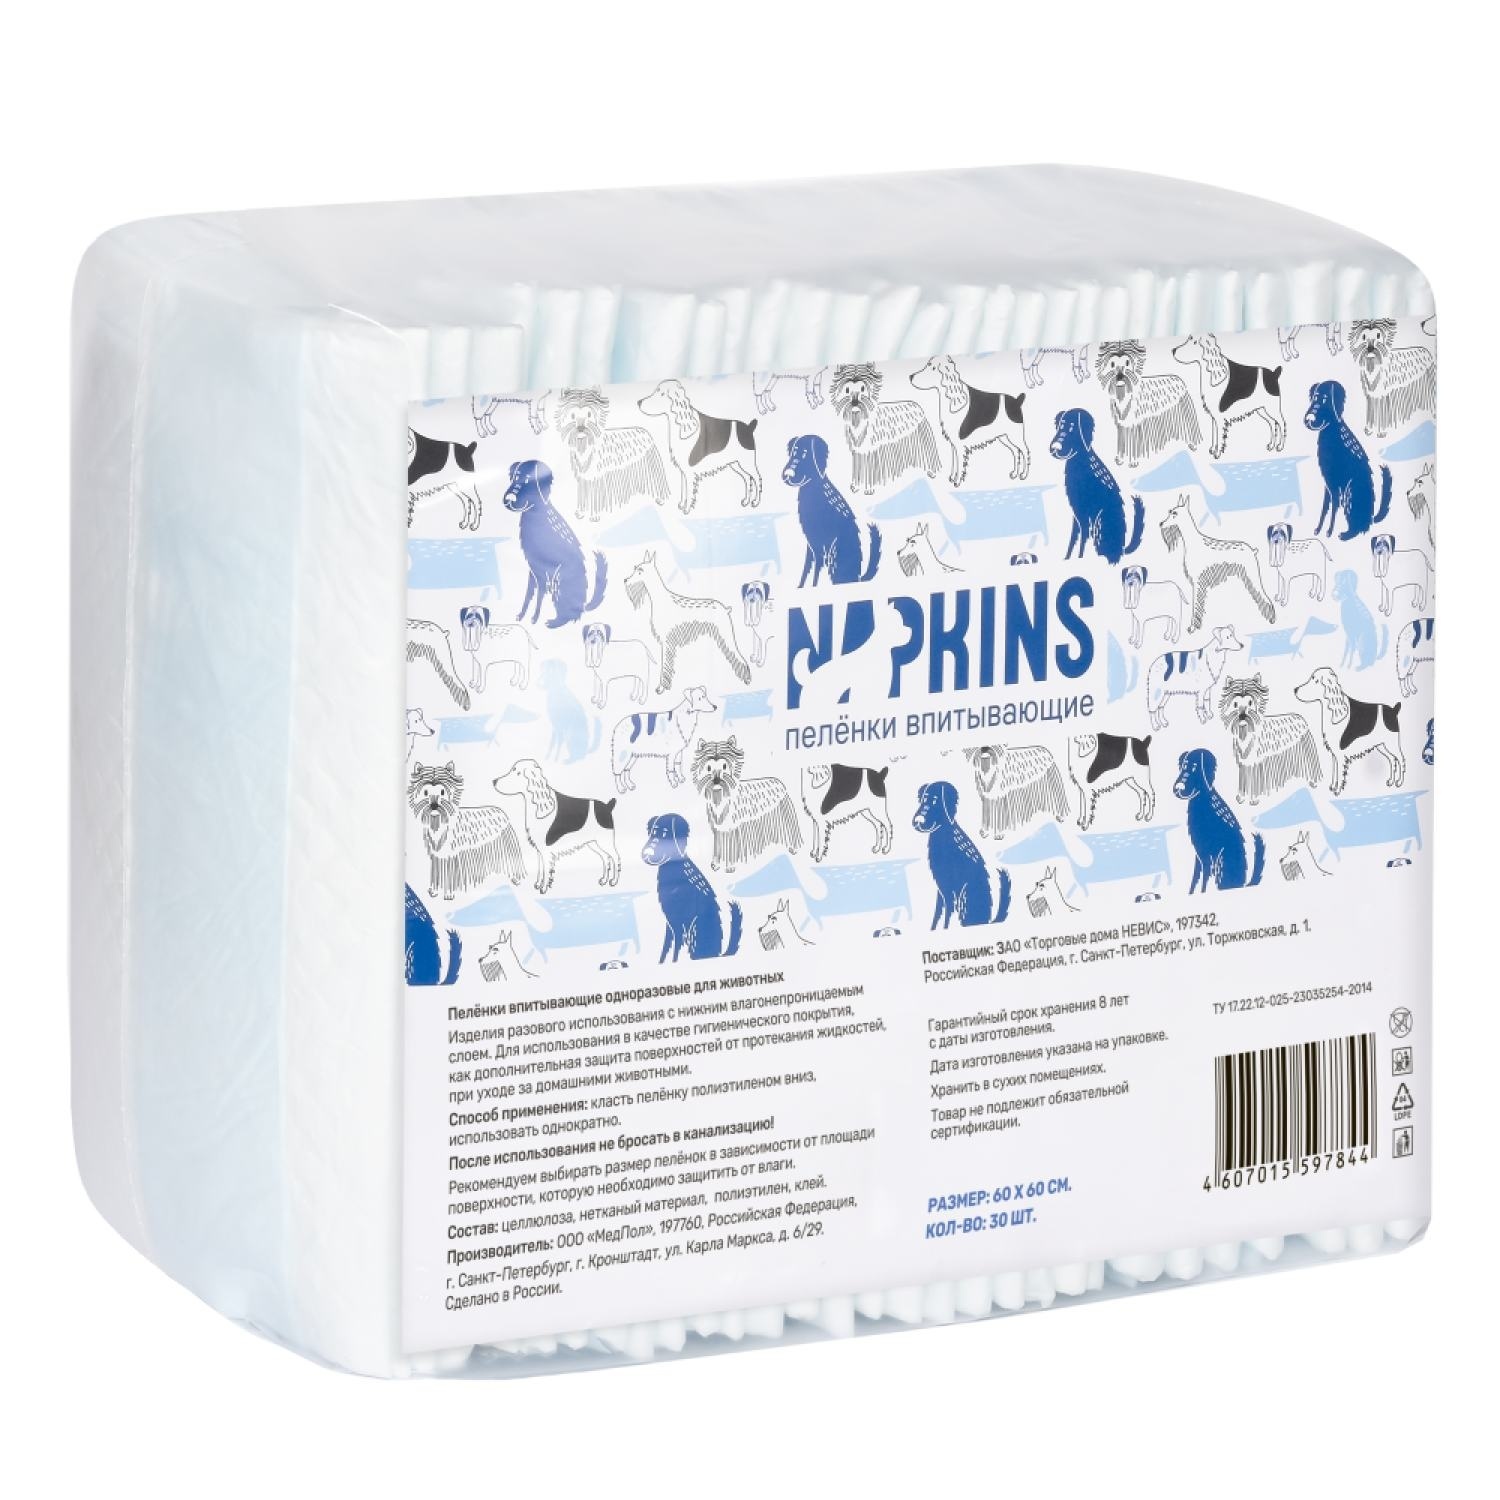 NAPKINS NAPKINS впитывающие пелёнки с целлюлозой для собак 60х60 (100 г) napkins napkins впитывающие пелёнки с целлюлозой для собак 60х60 100 г